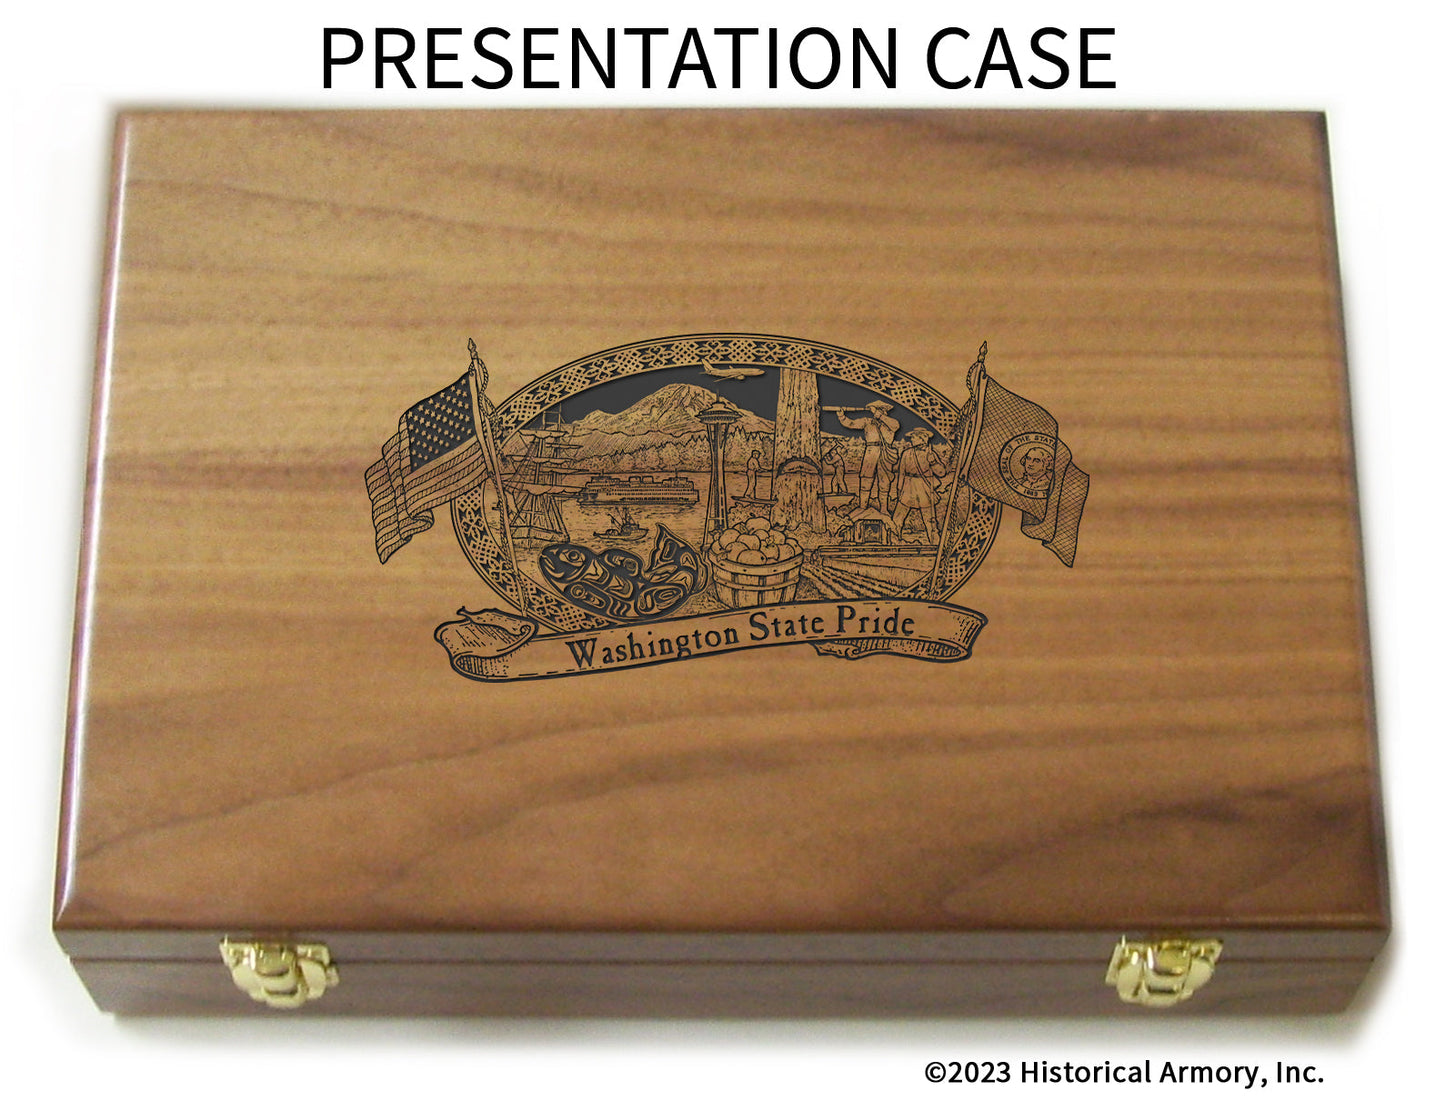 Washington State Pride Limited Edition Engraved 1911 Presentation Case